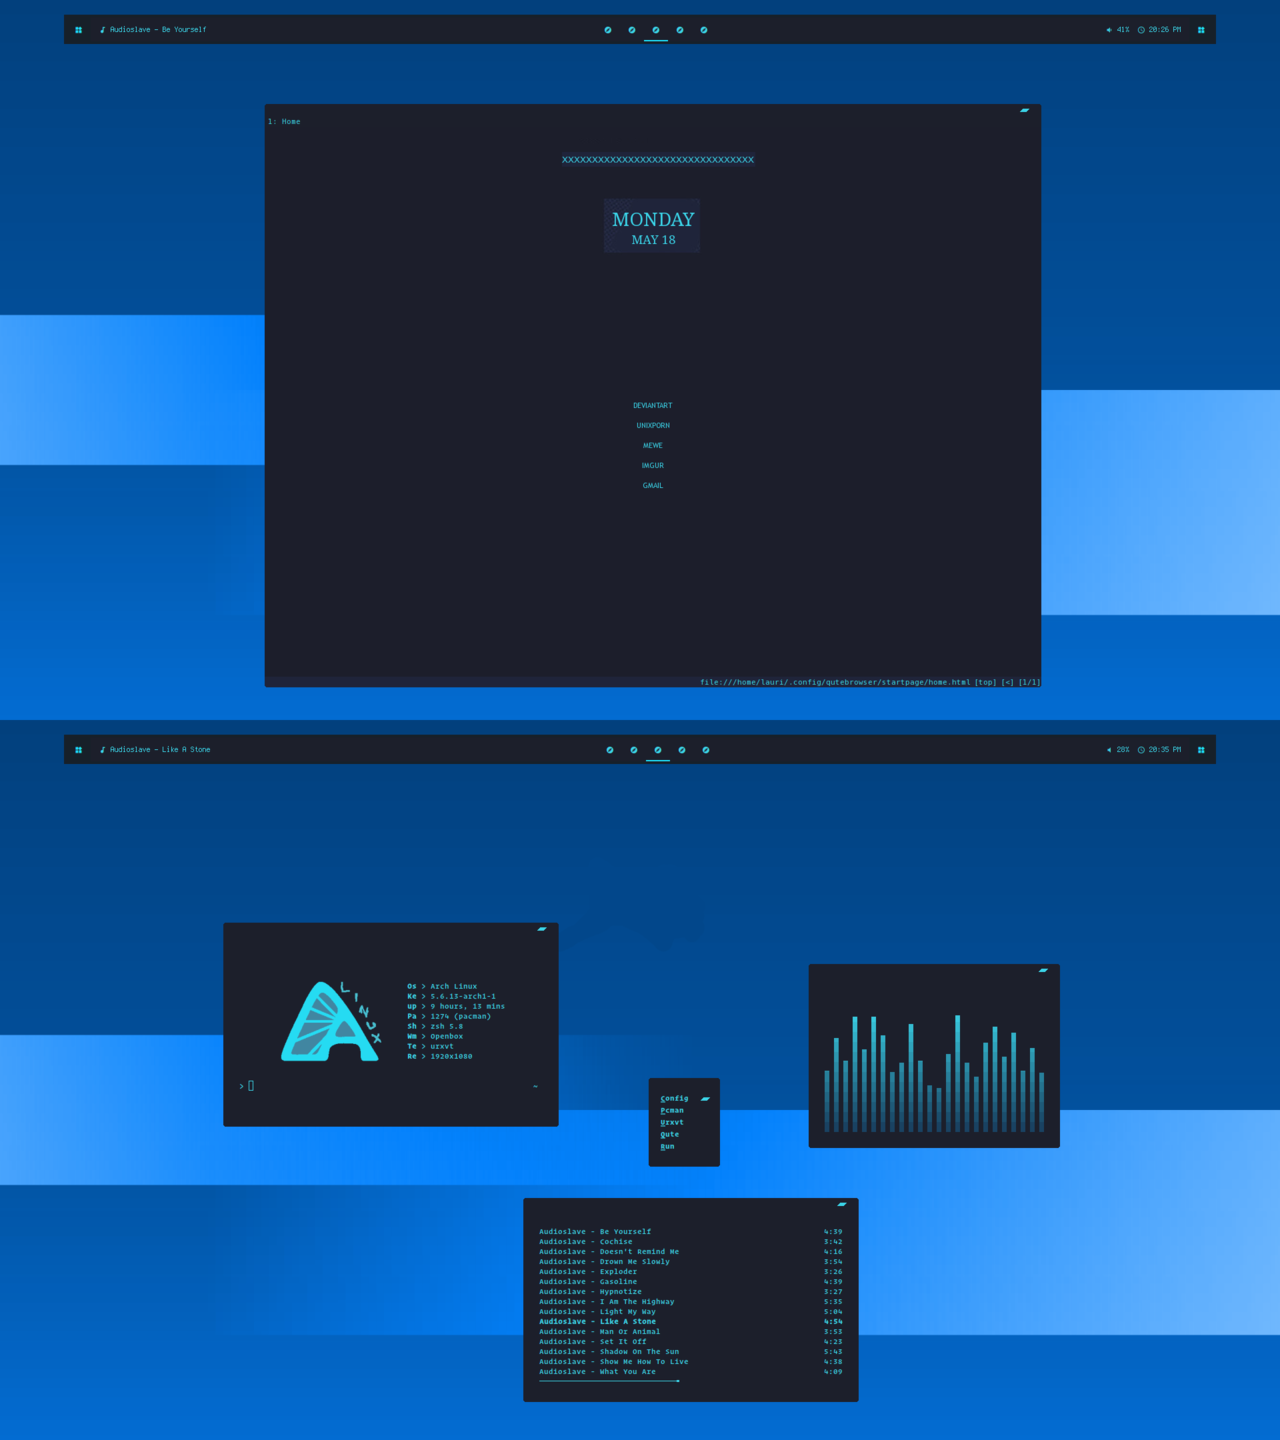 dracula theme android studio in mac